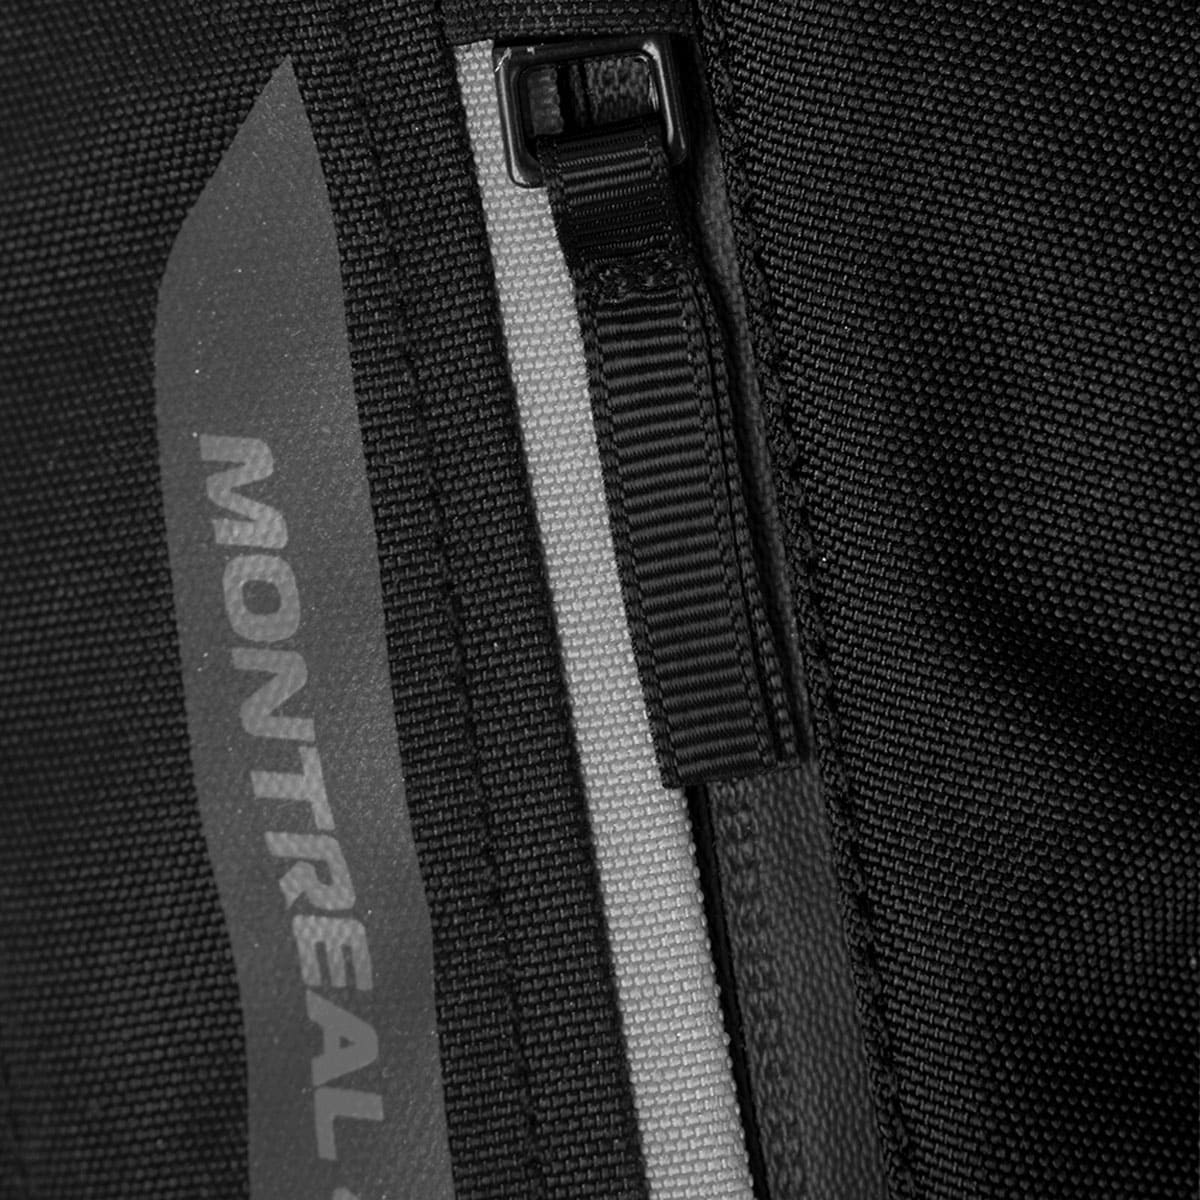 Oxford Montreal 4.0 Jacket WP - Stealth Black zip detailing